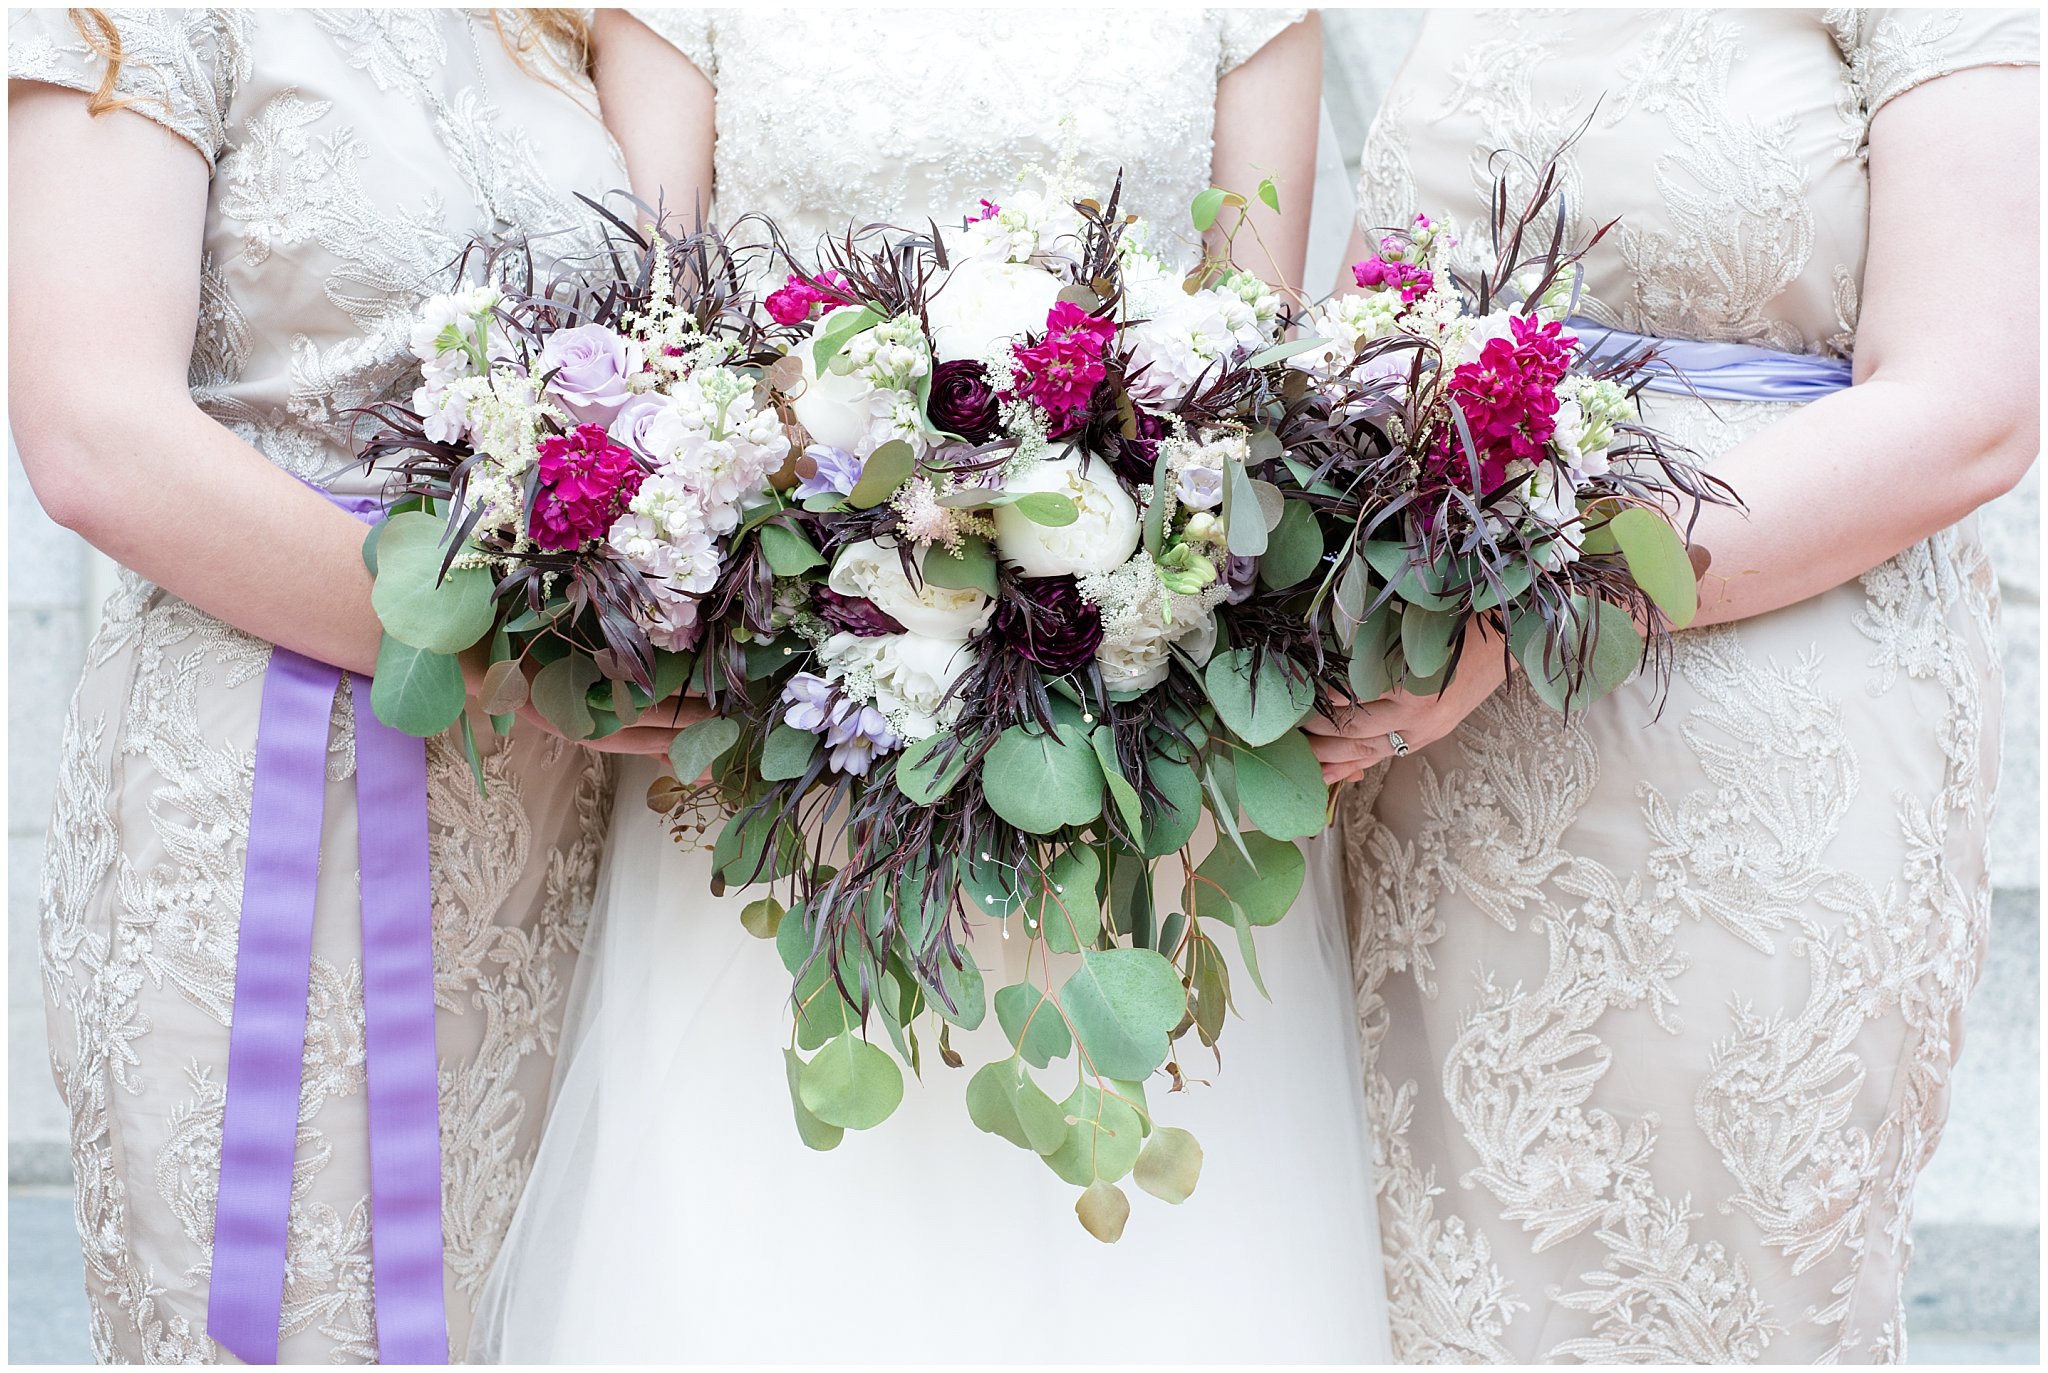 Wedding Flowers and Dress | Stress Free Wedding Day Advice | Jessie and Dallin Photography